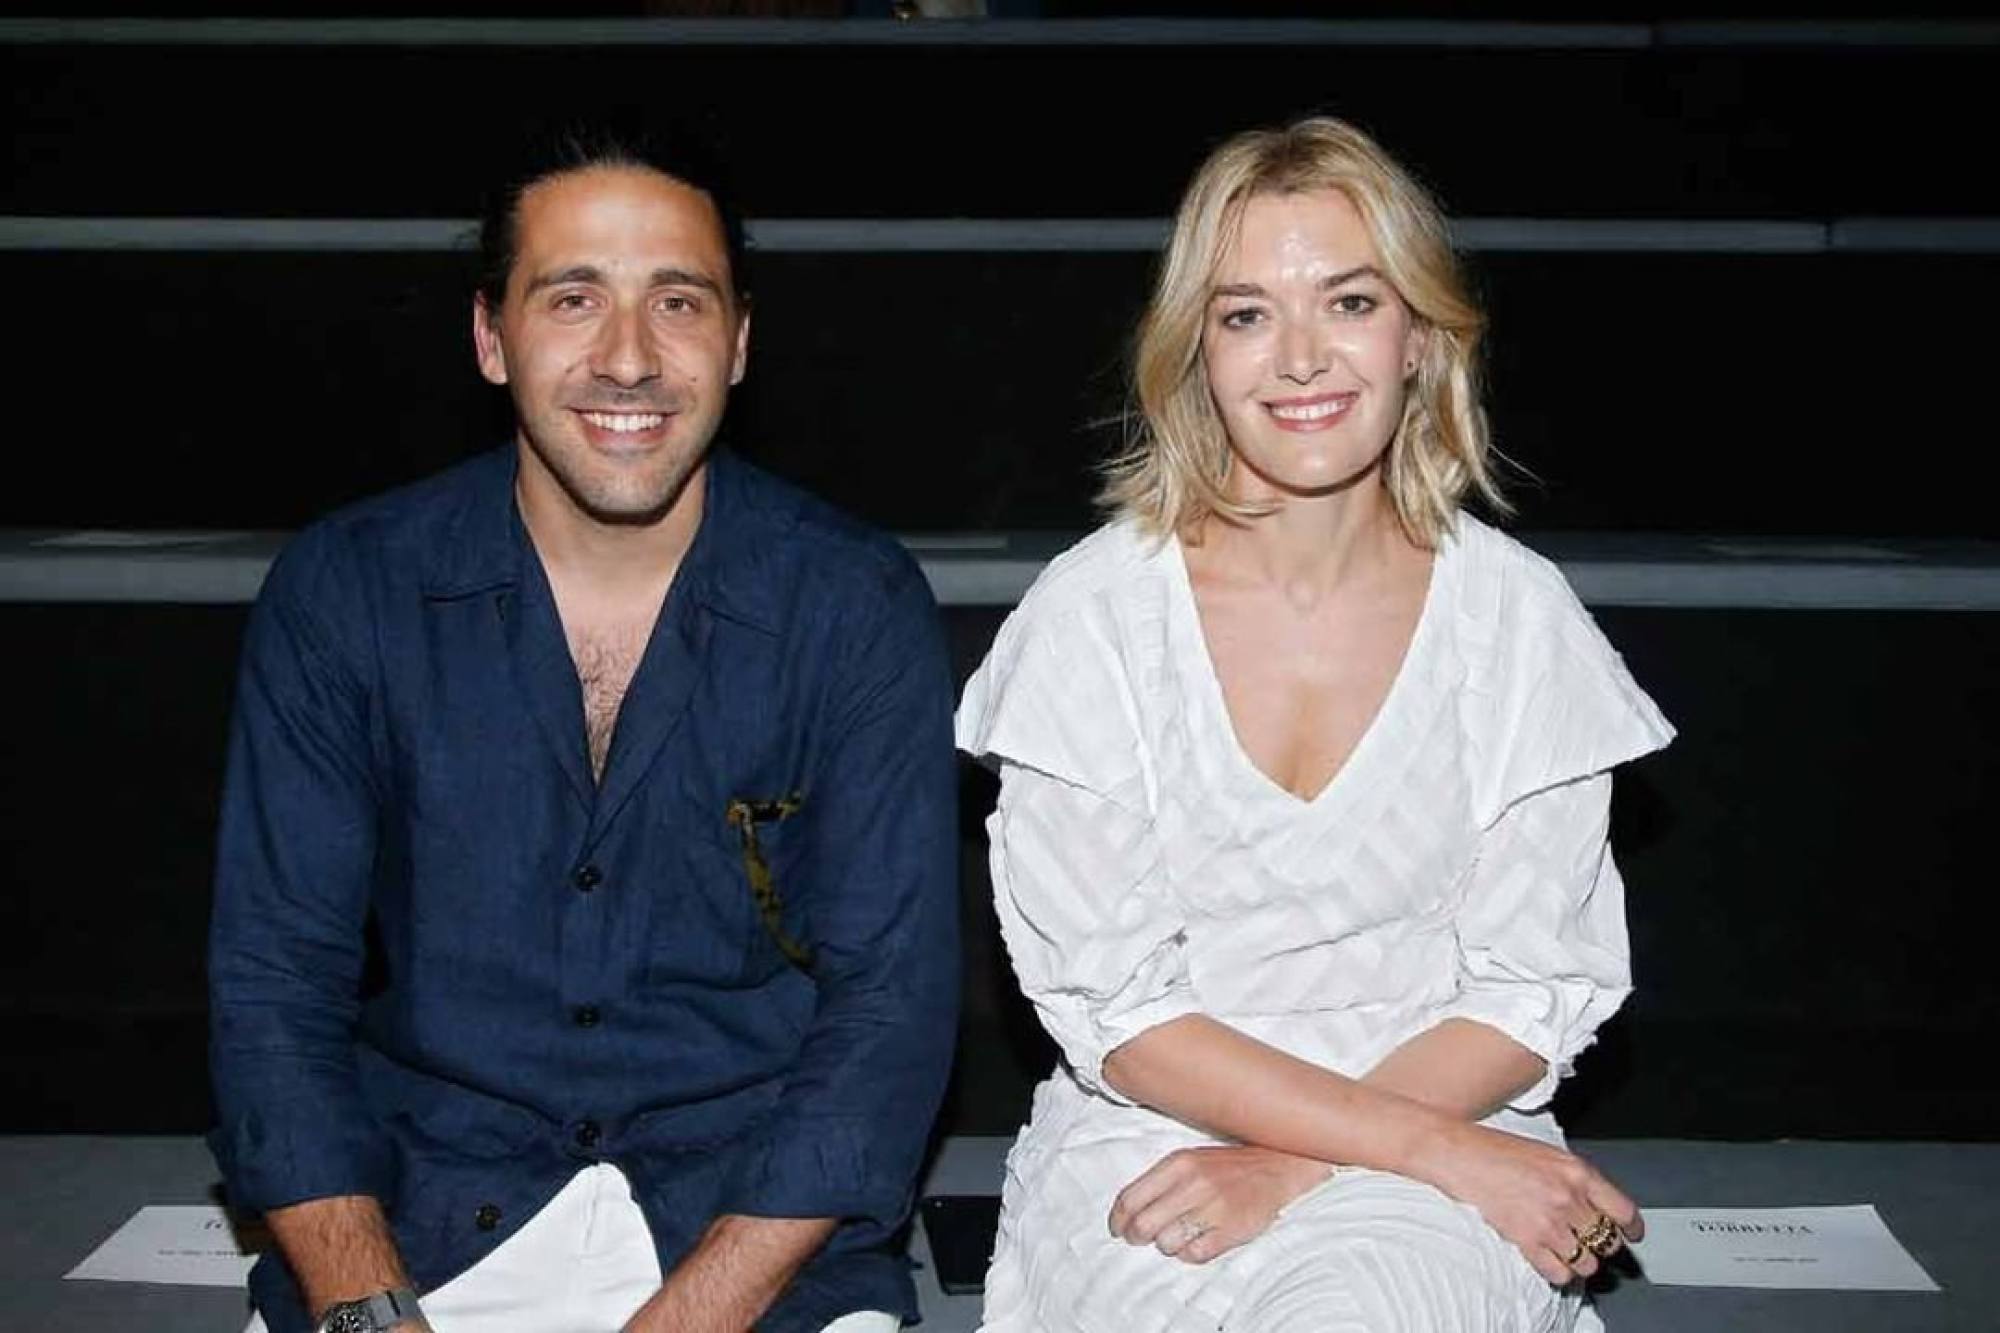 Zara businesswoman Marta Ortega Pérez and her husband Carlos Toretta got married in 2018. Photo: @magazinespain/Instagram